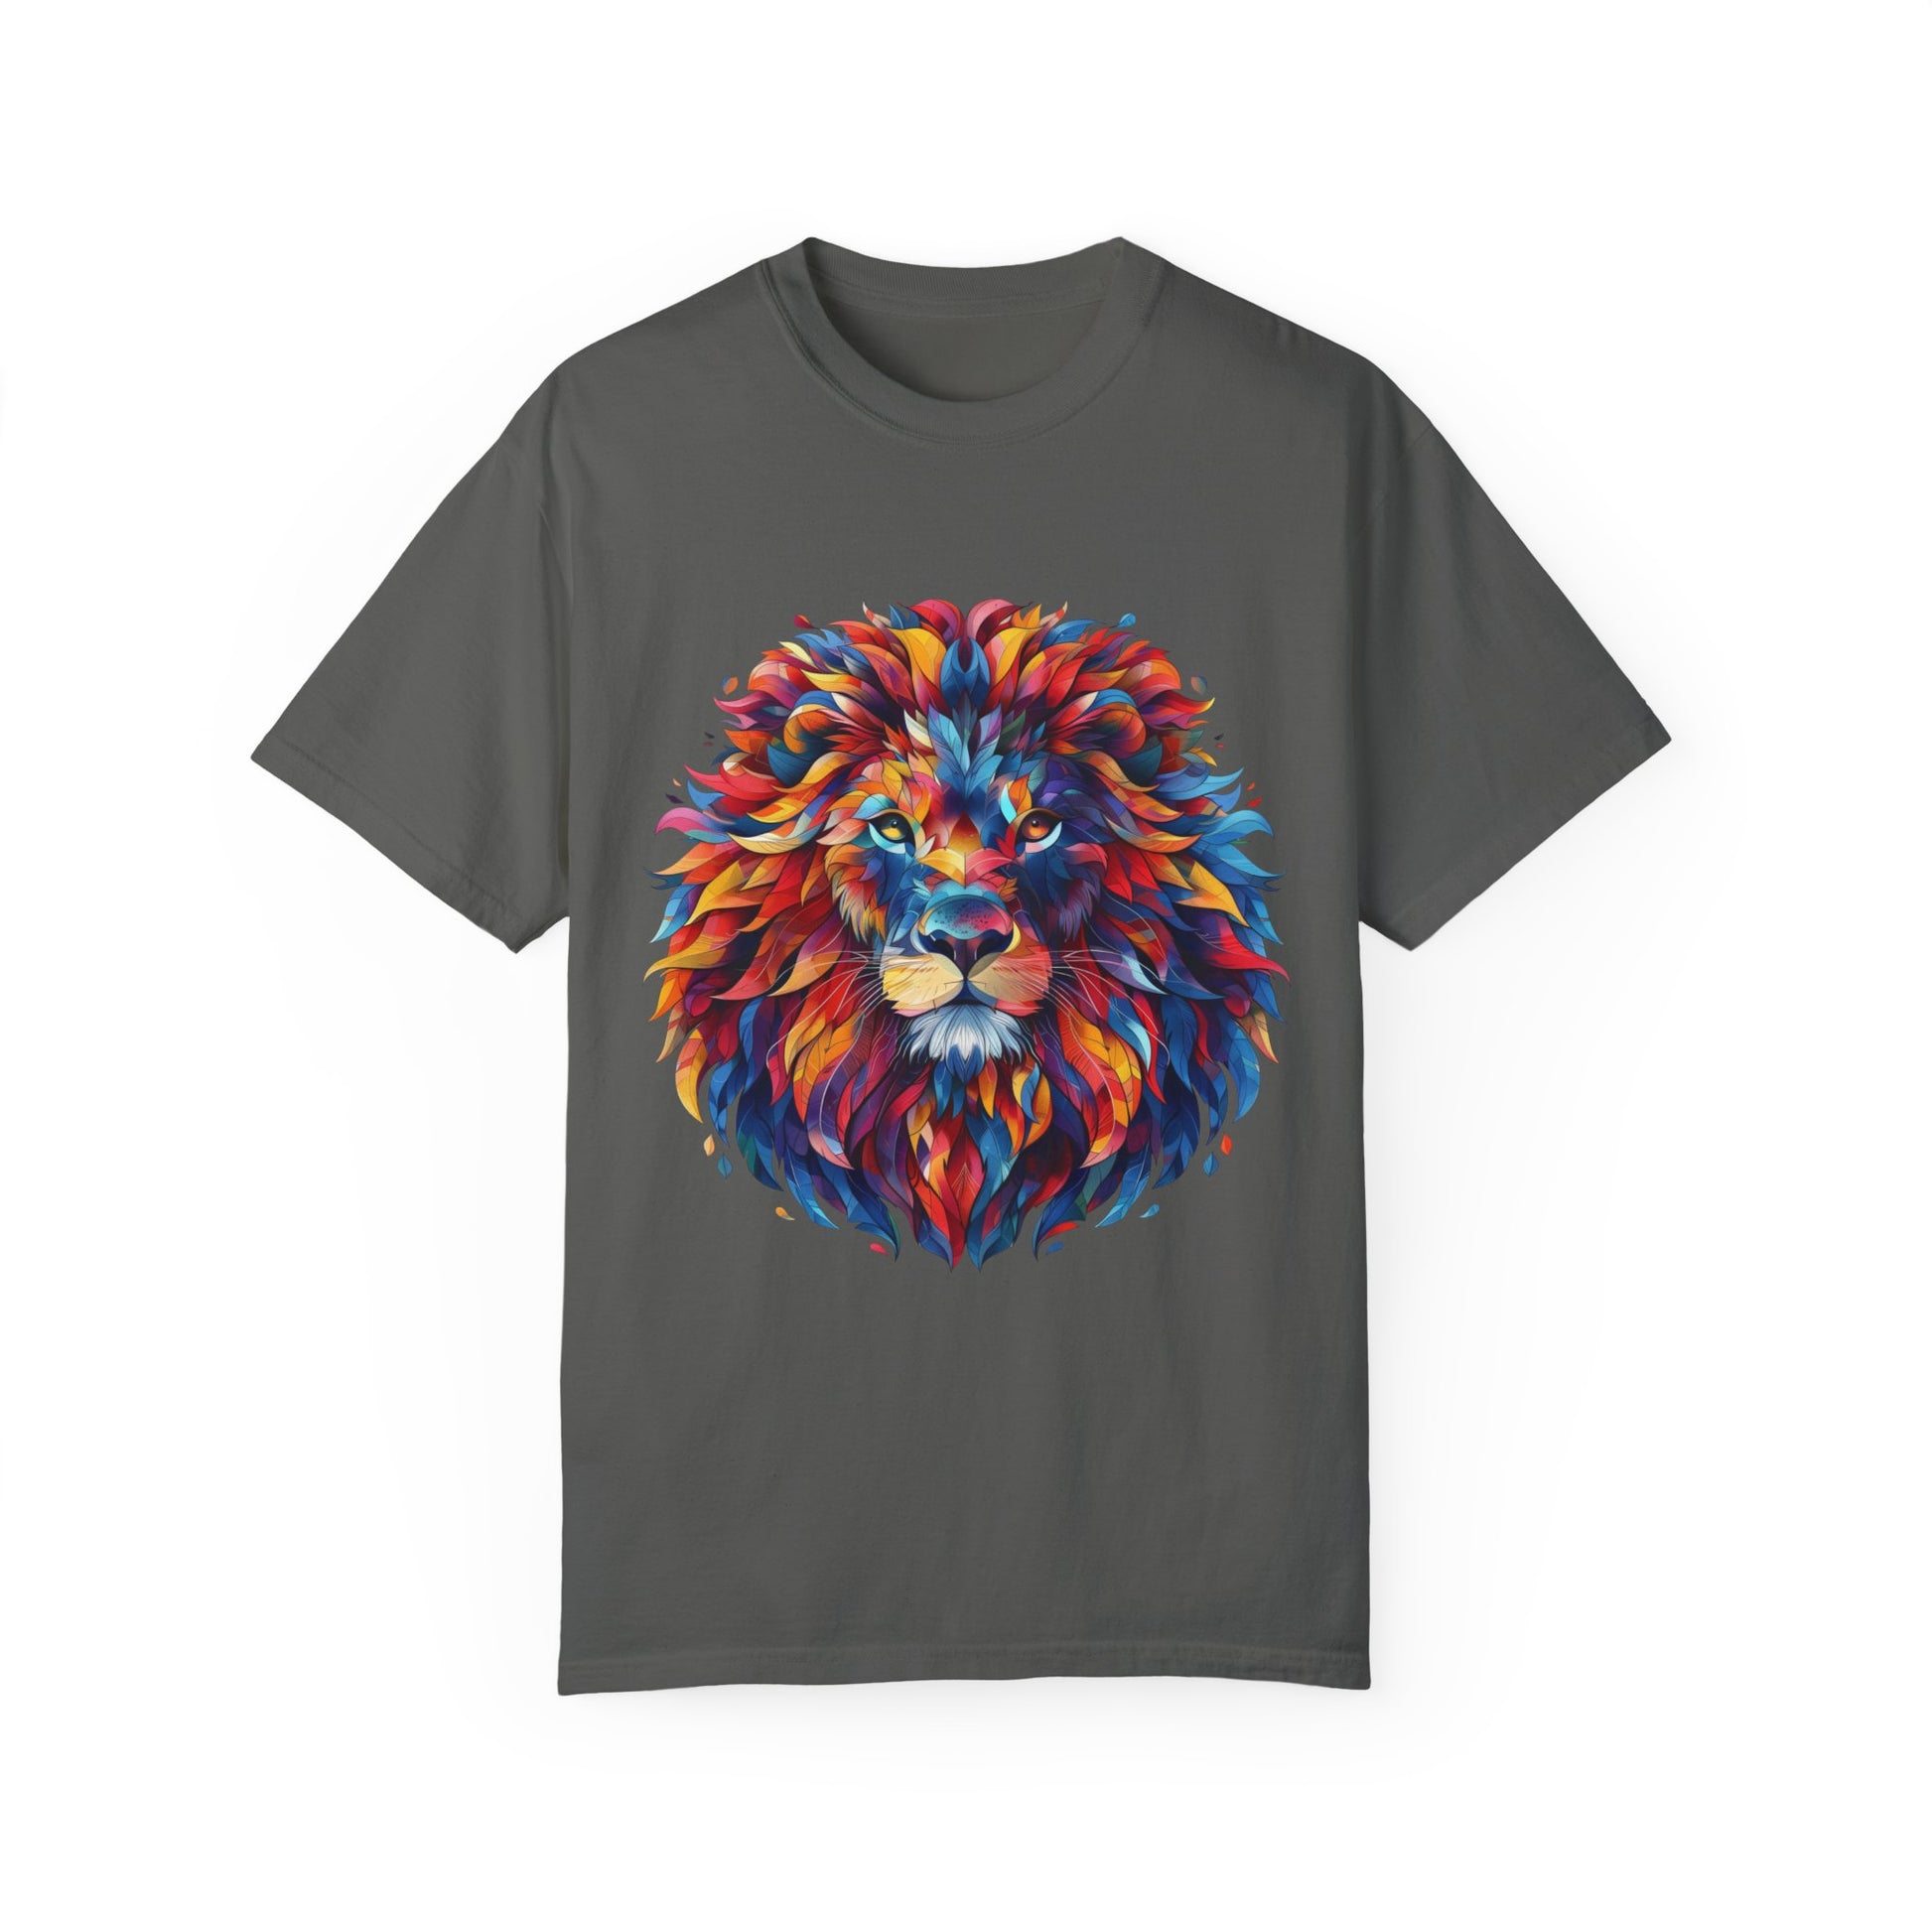 Lion Head Cool Graphic Design Novelty Unisex Garment-dyed T-shirt Cotton Funny Humorous Graphic Soft Premium Unisex Men Women Pepper T-shirt Birthday Gift-12